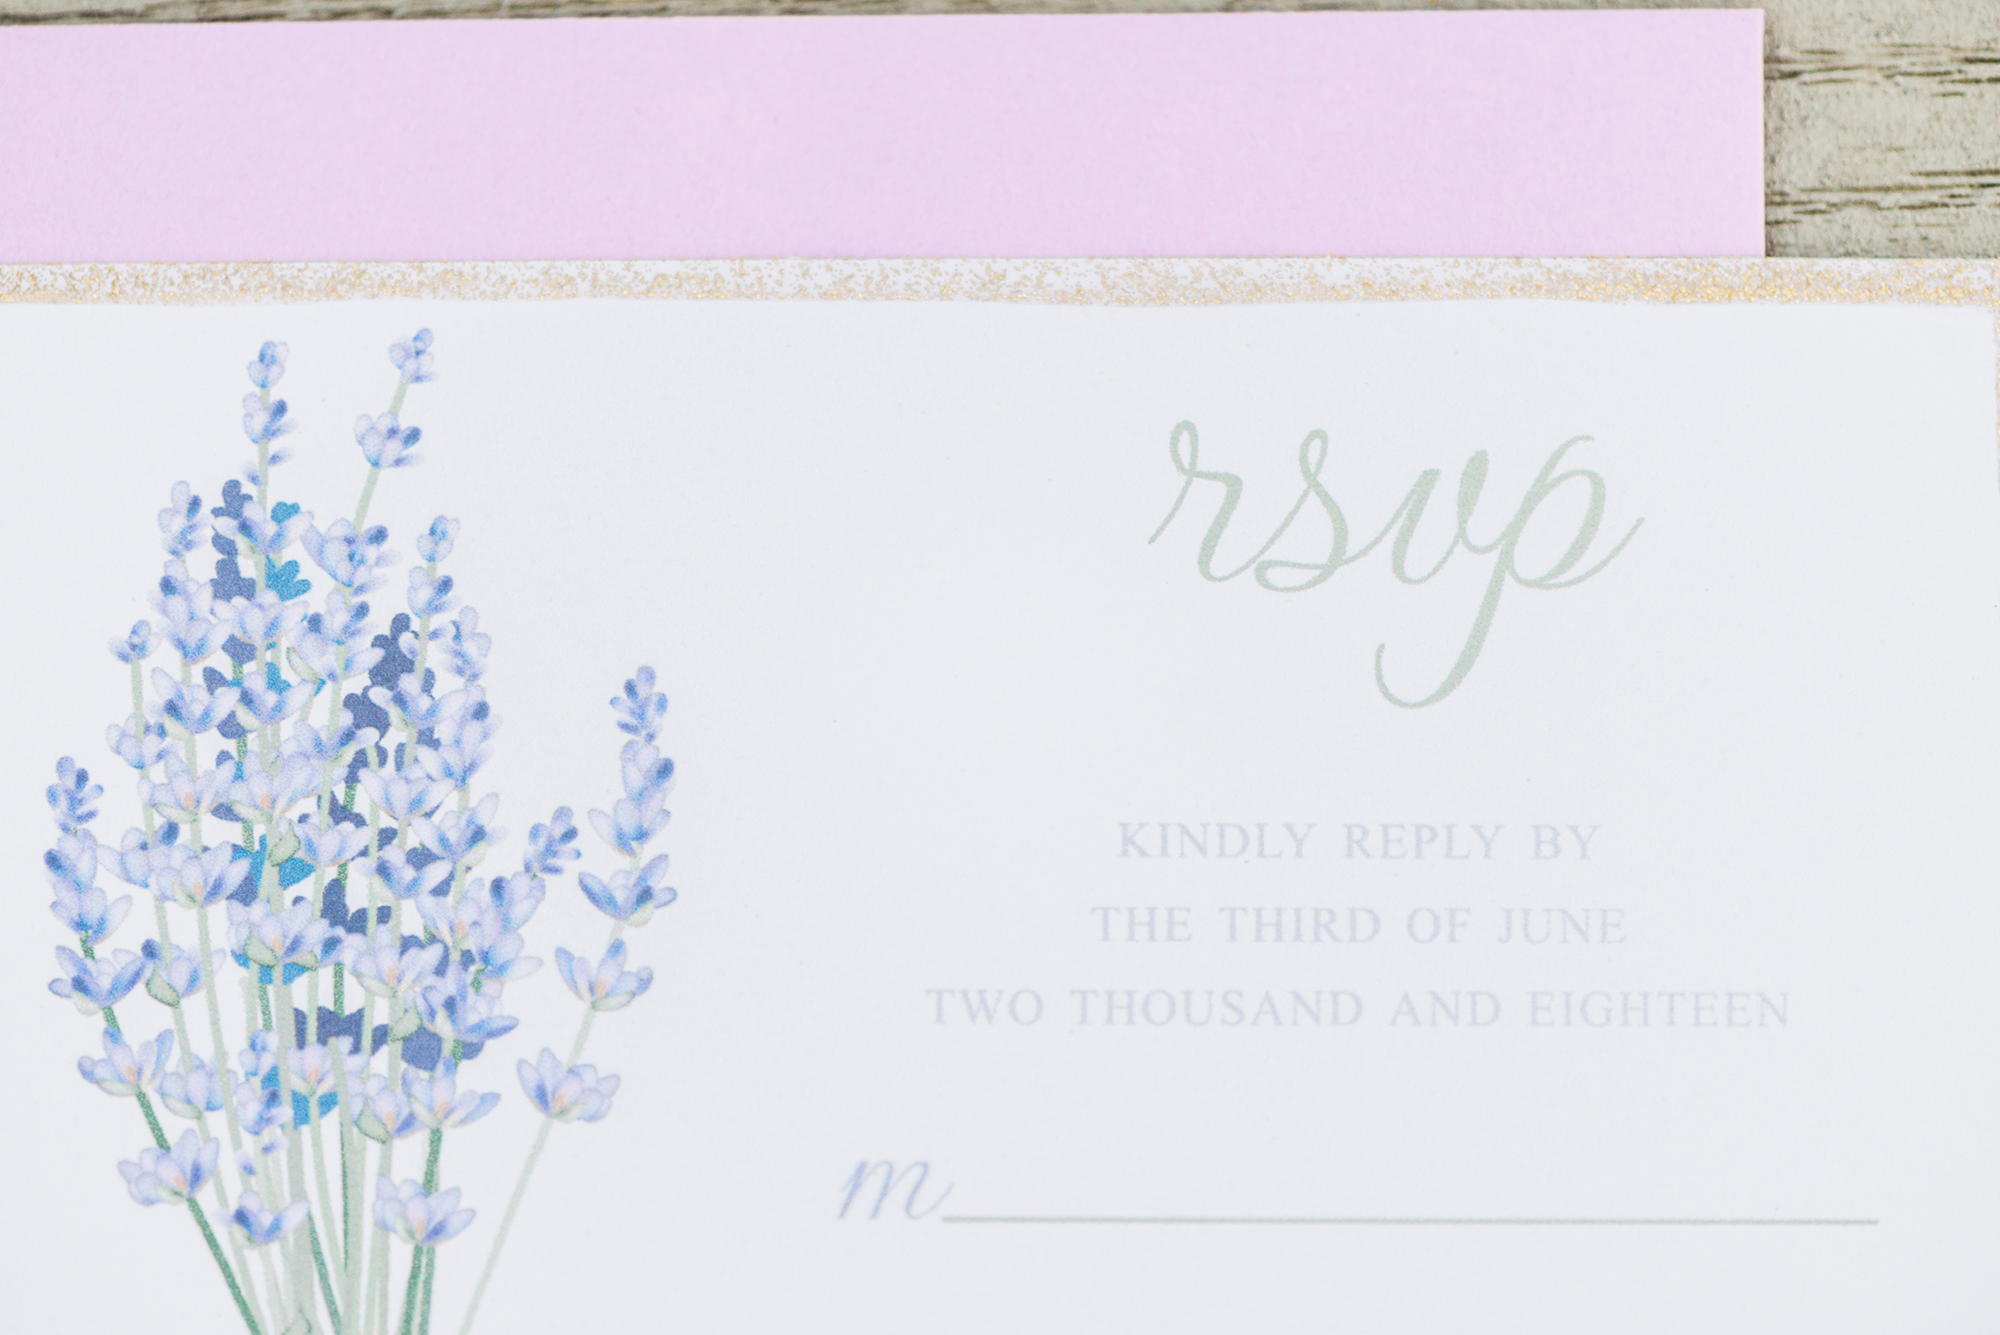 A Vintage French Lavender Field Wedding -- Wedding Inspiration - The Overwhelmed Bride